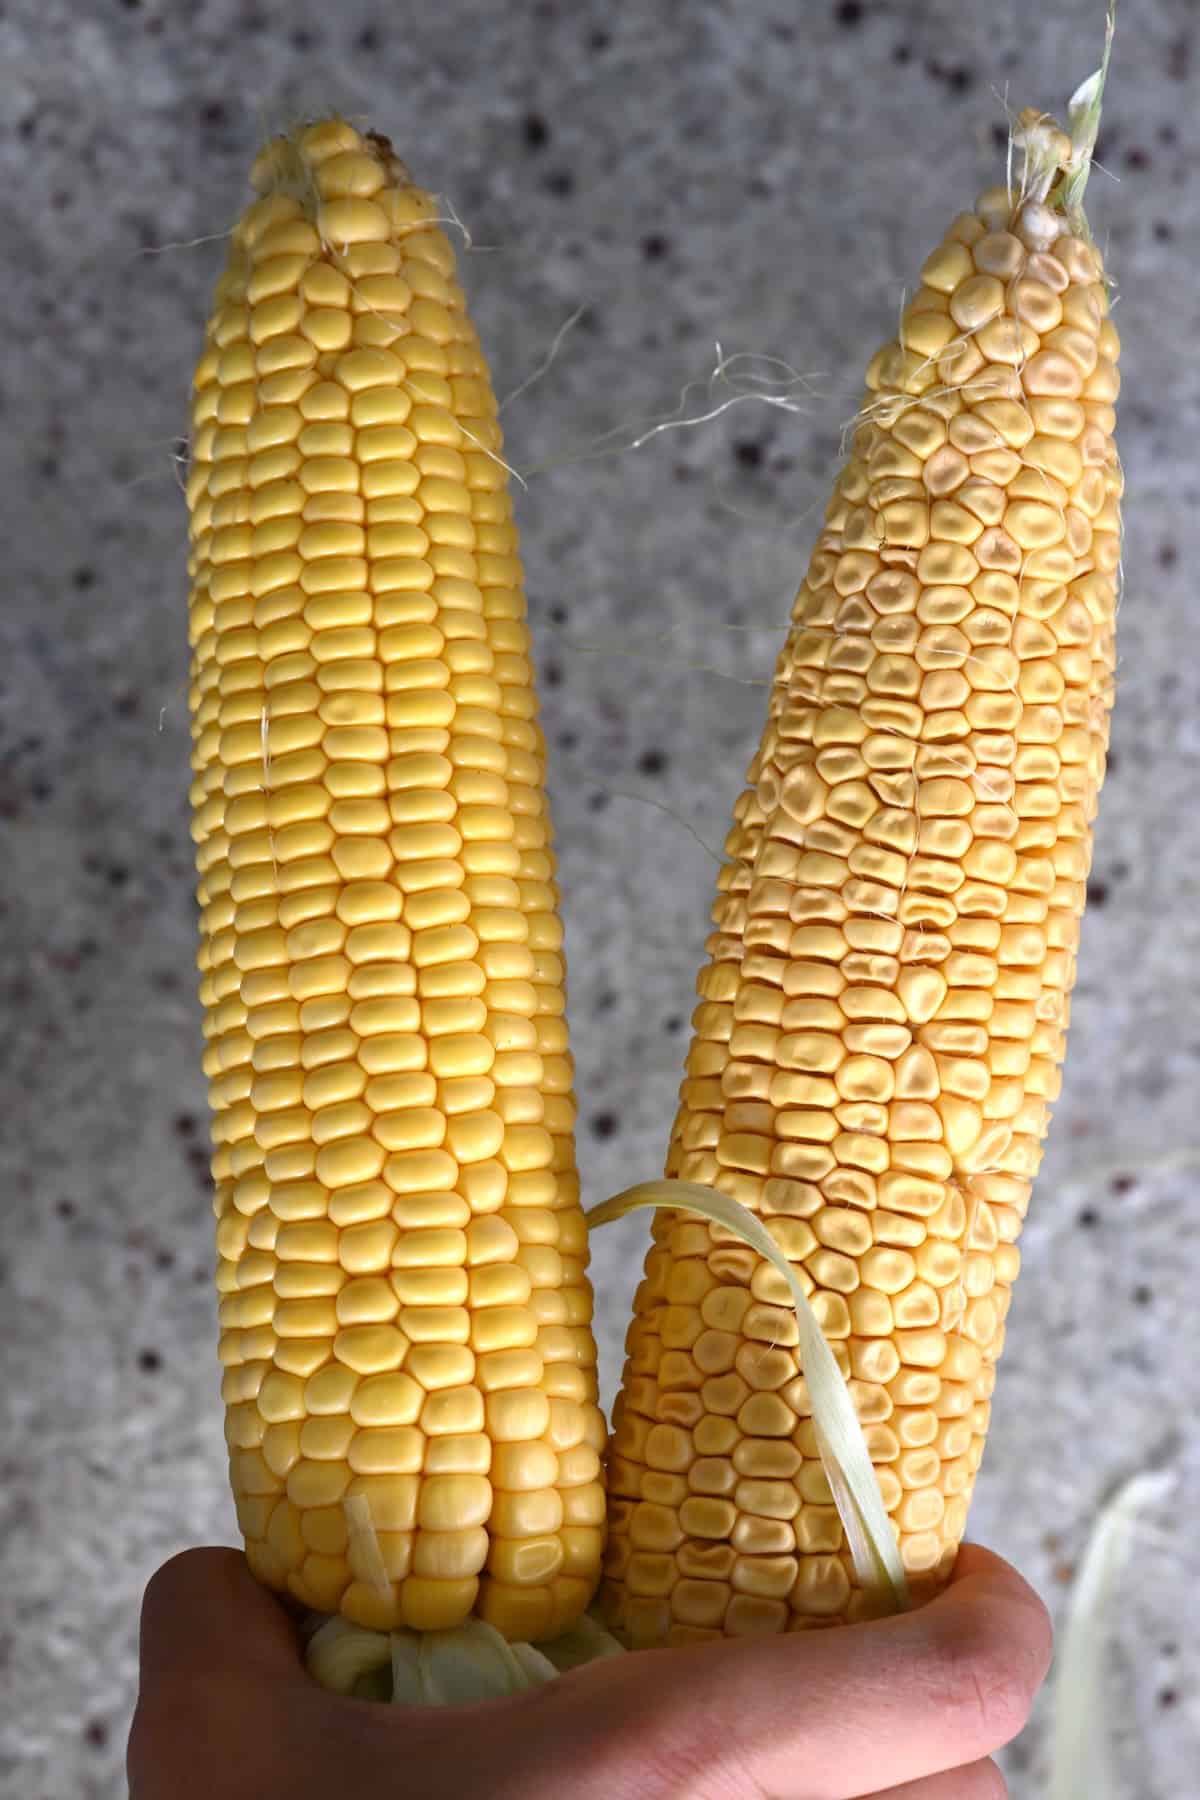 A fresh ear of corn and a shriveled one